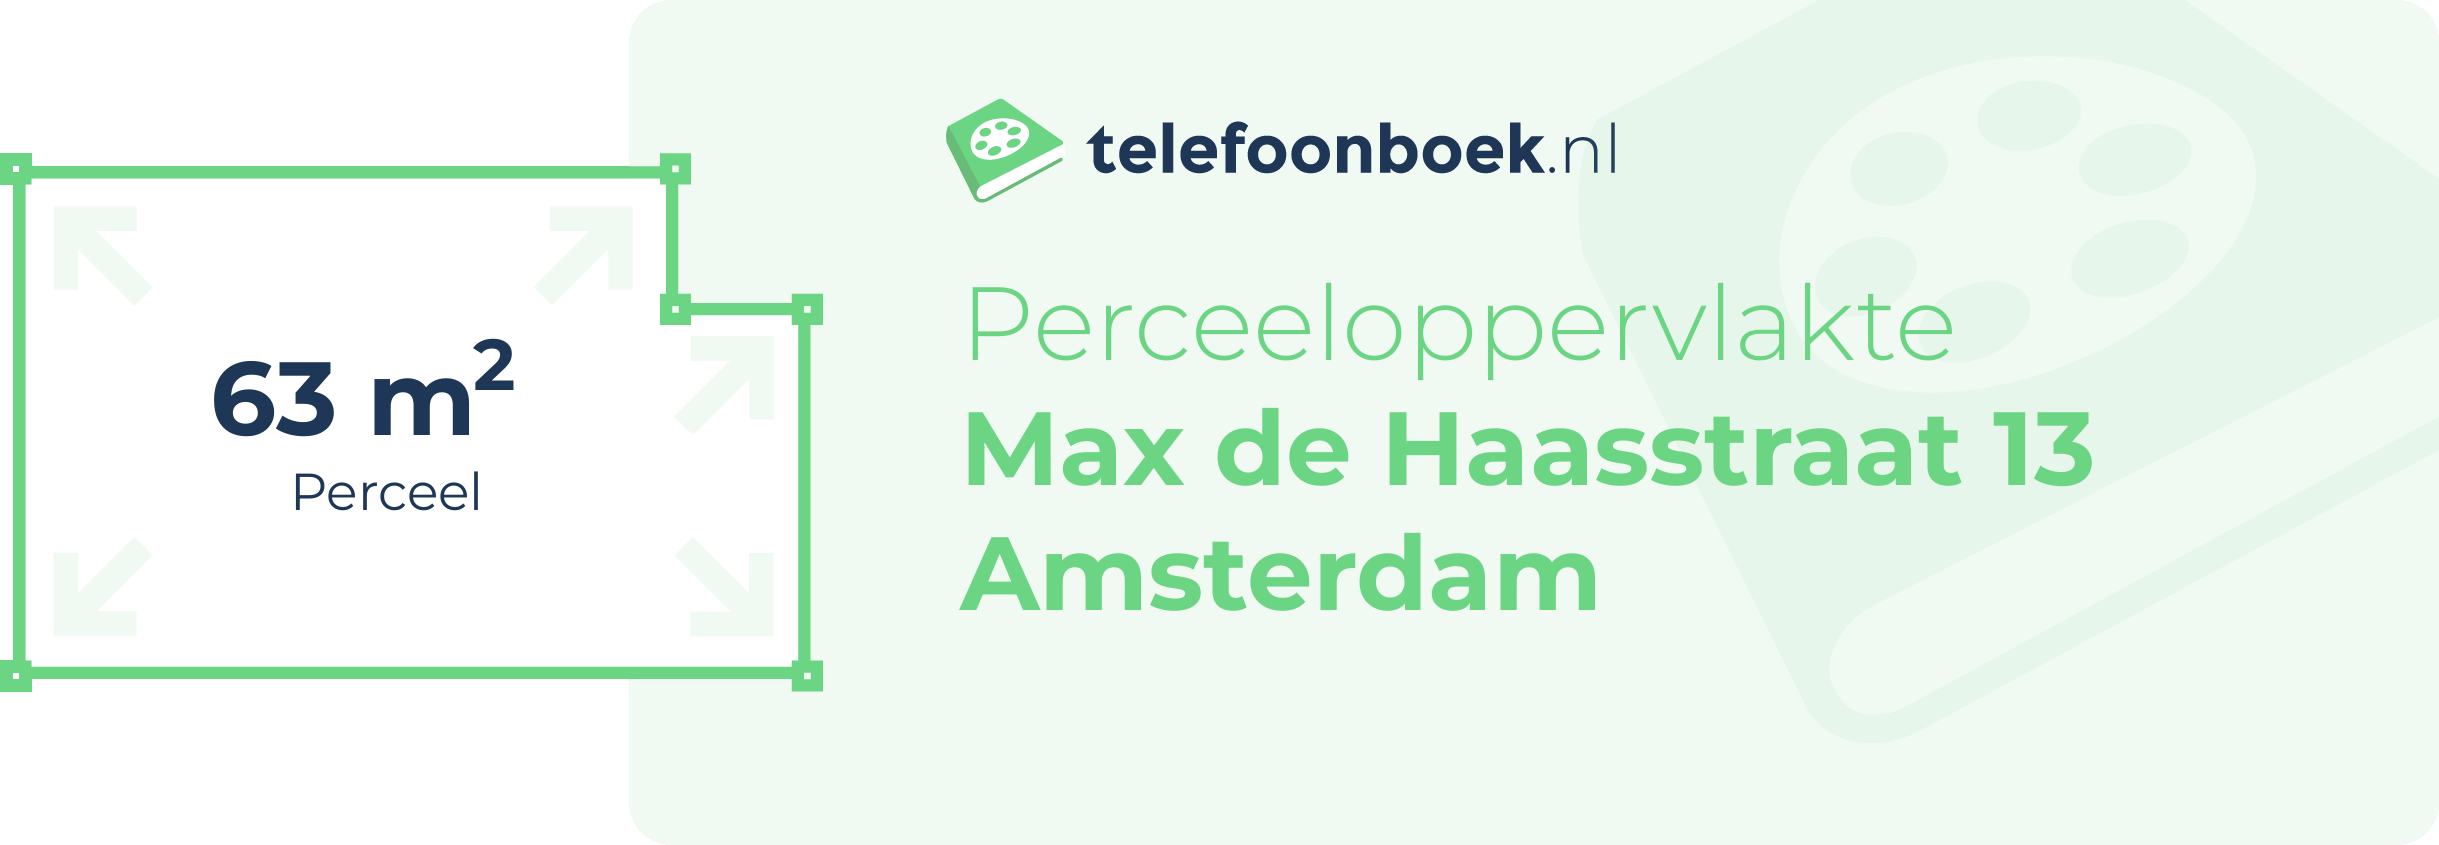 Perceeloppervlakte Max De Haasstraat 13 Amsterdam